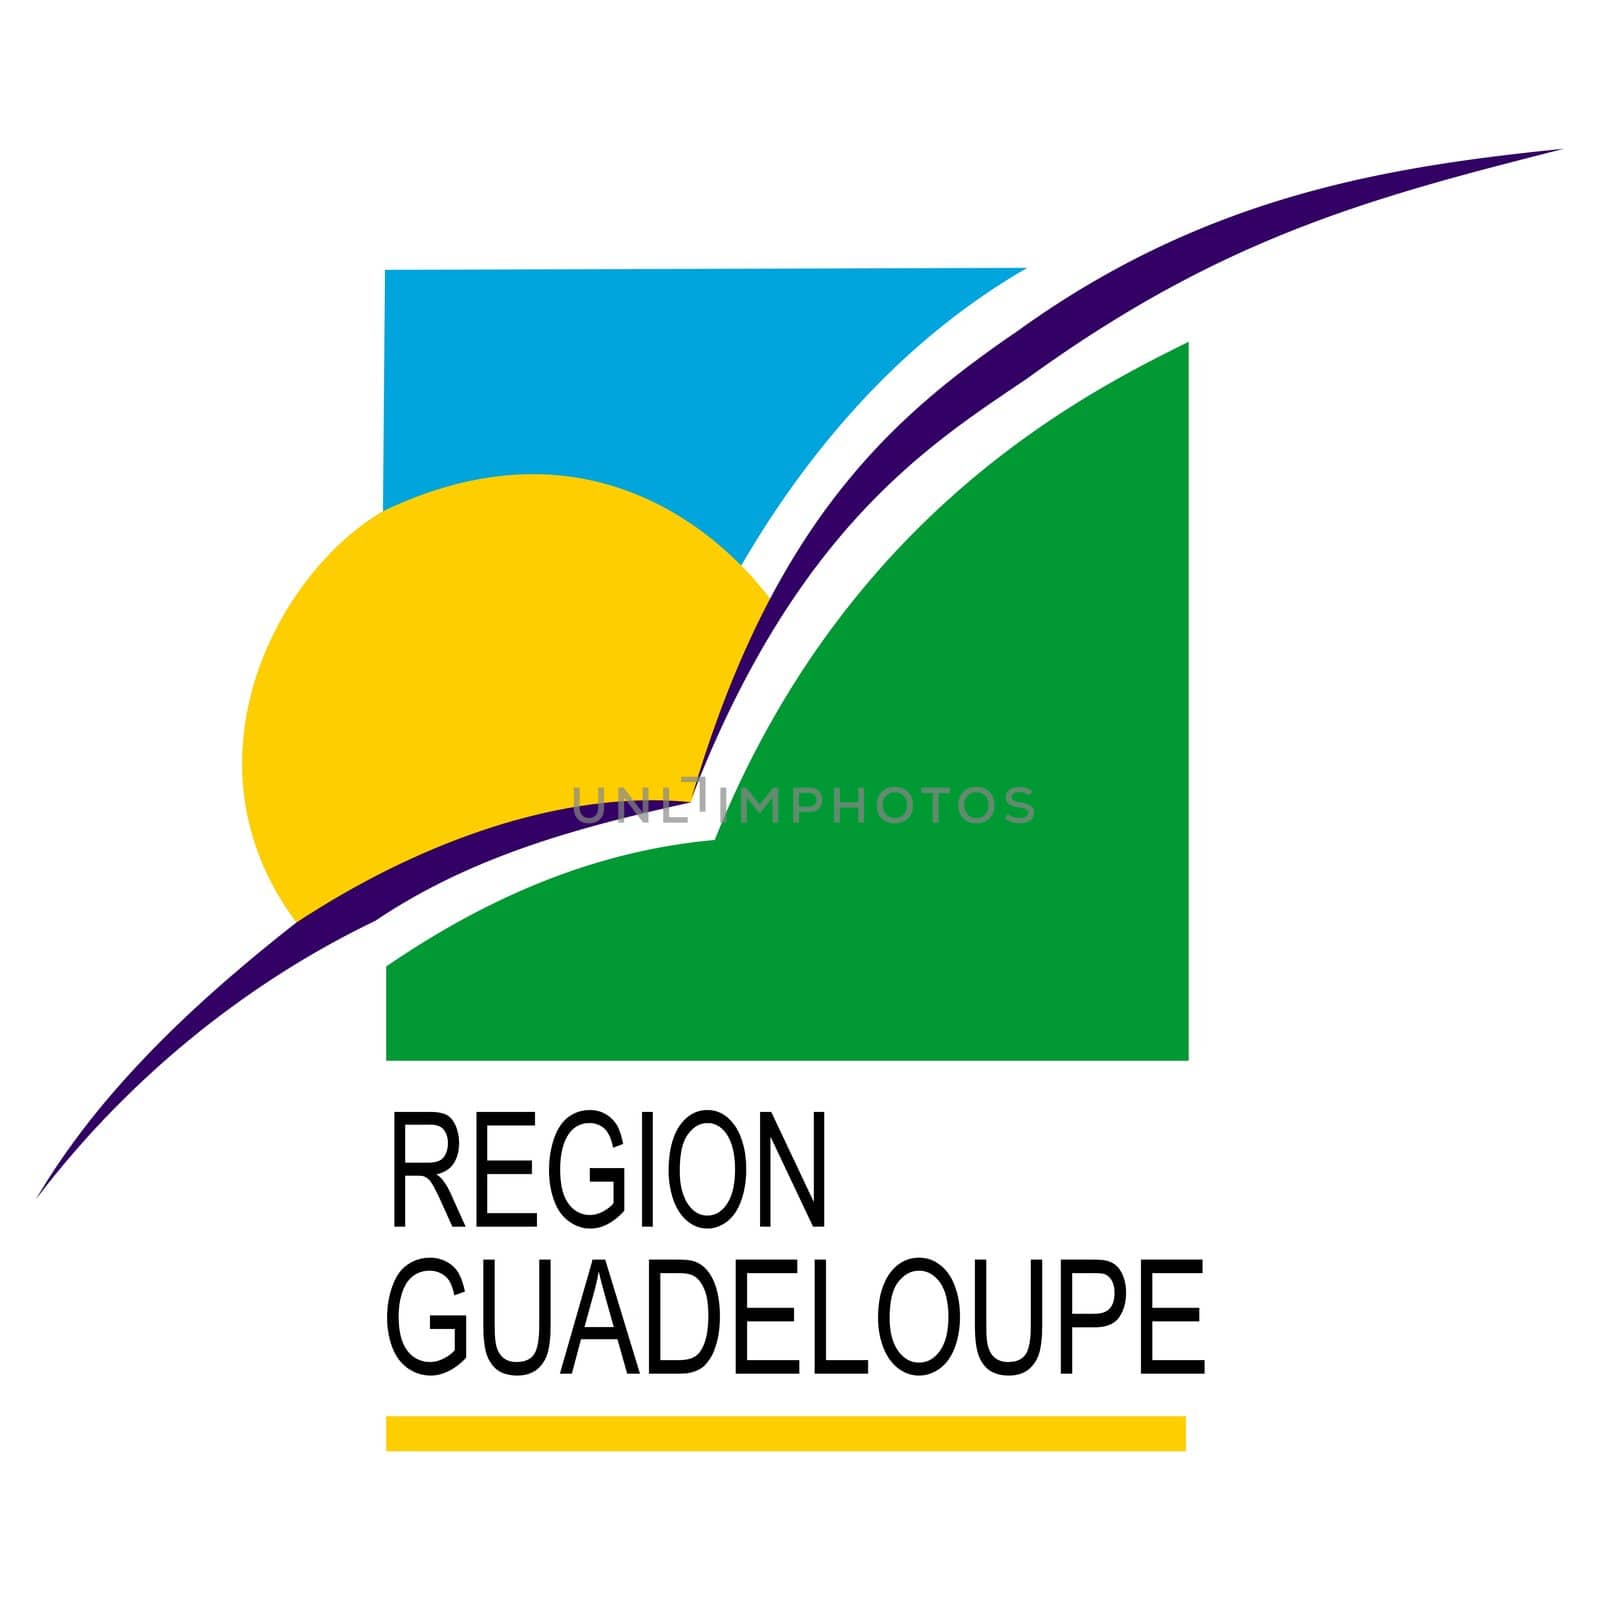 Flag Of Region Guadeloupe by tony4urban